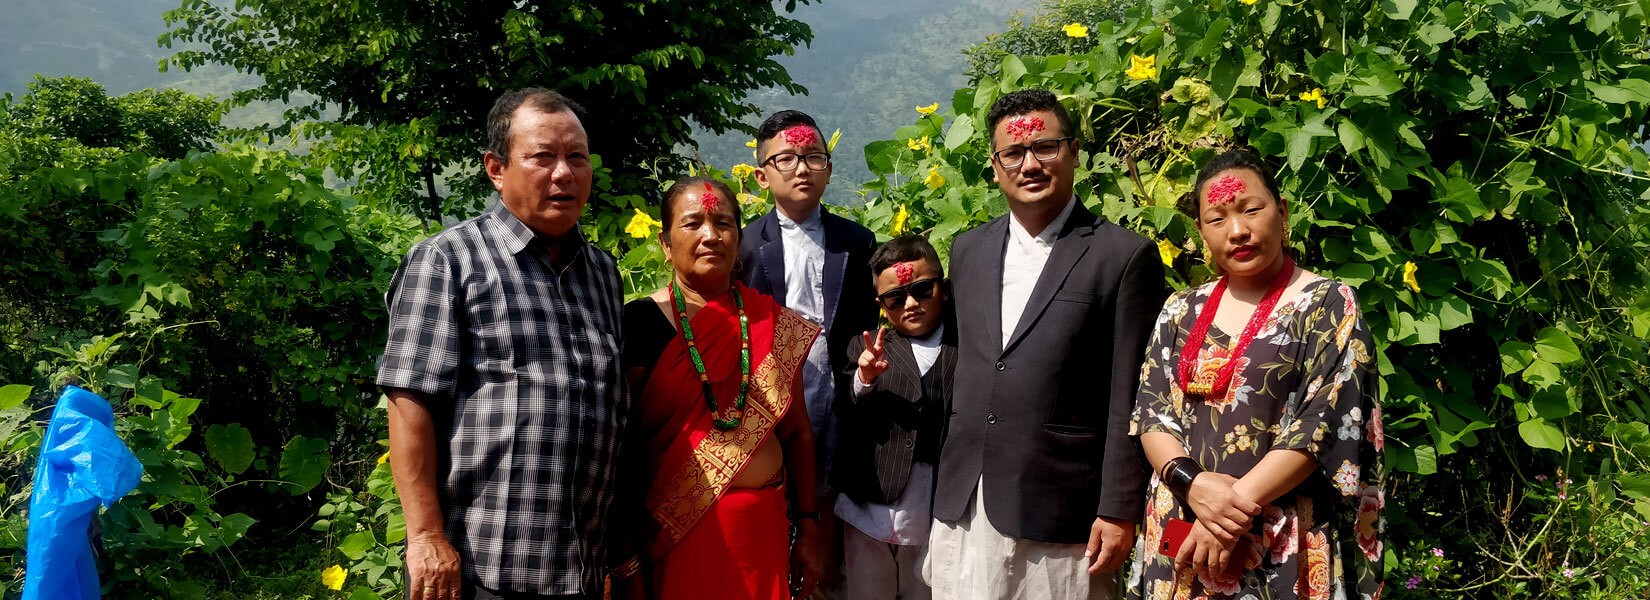 Dashain Festival of Nepal